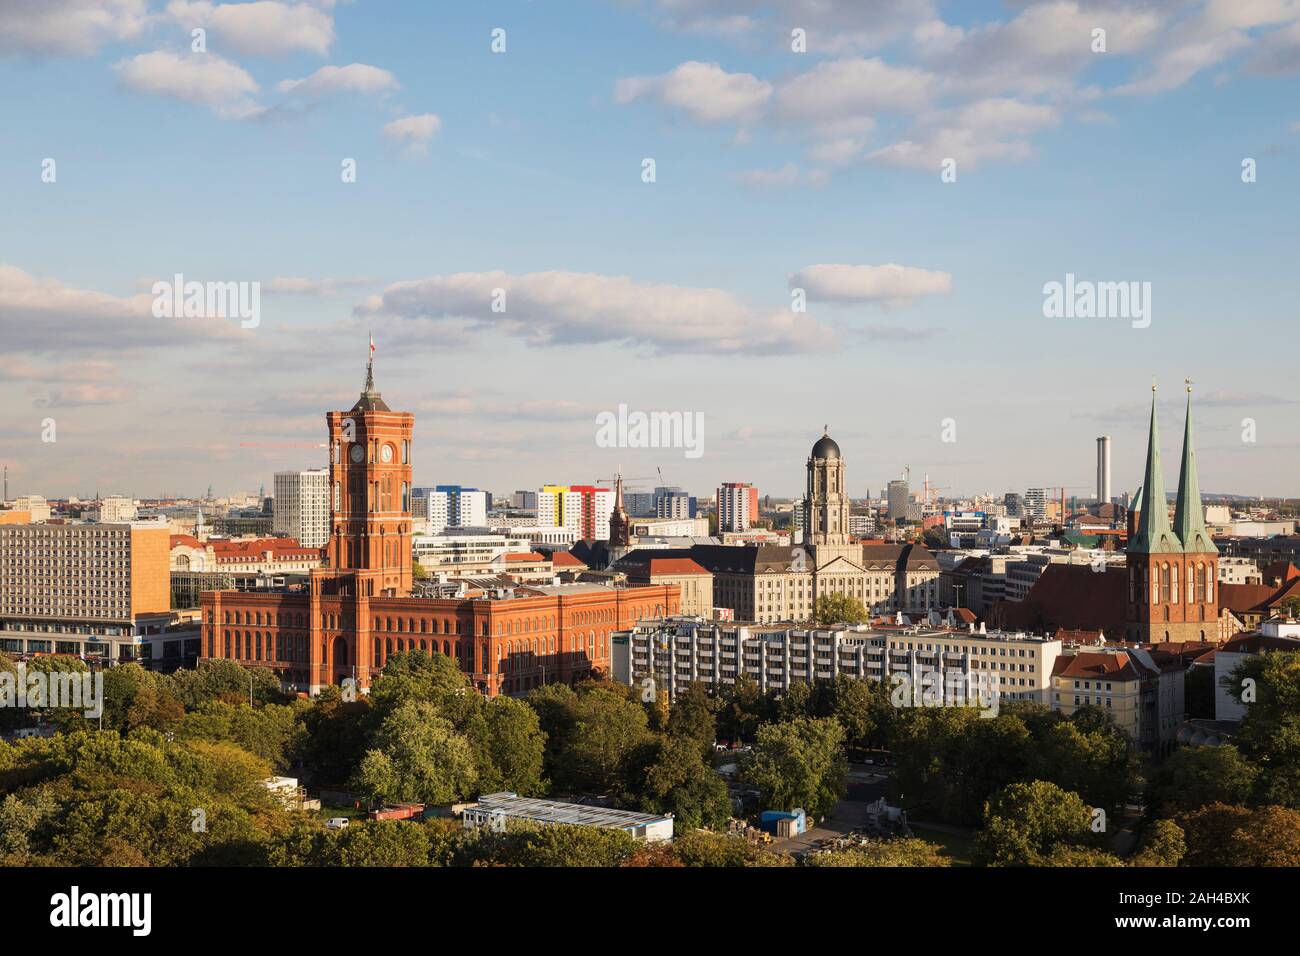 Germany, Berlin, Alexanderplatz, Rotes Rathaus, Nikolaiviertel, Saint Nicholas Church and surrounding city buildings Stock Photo